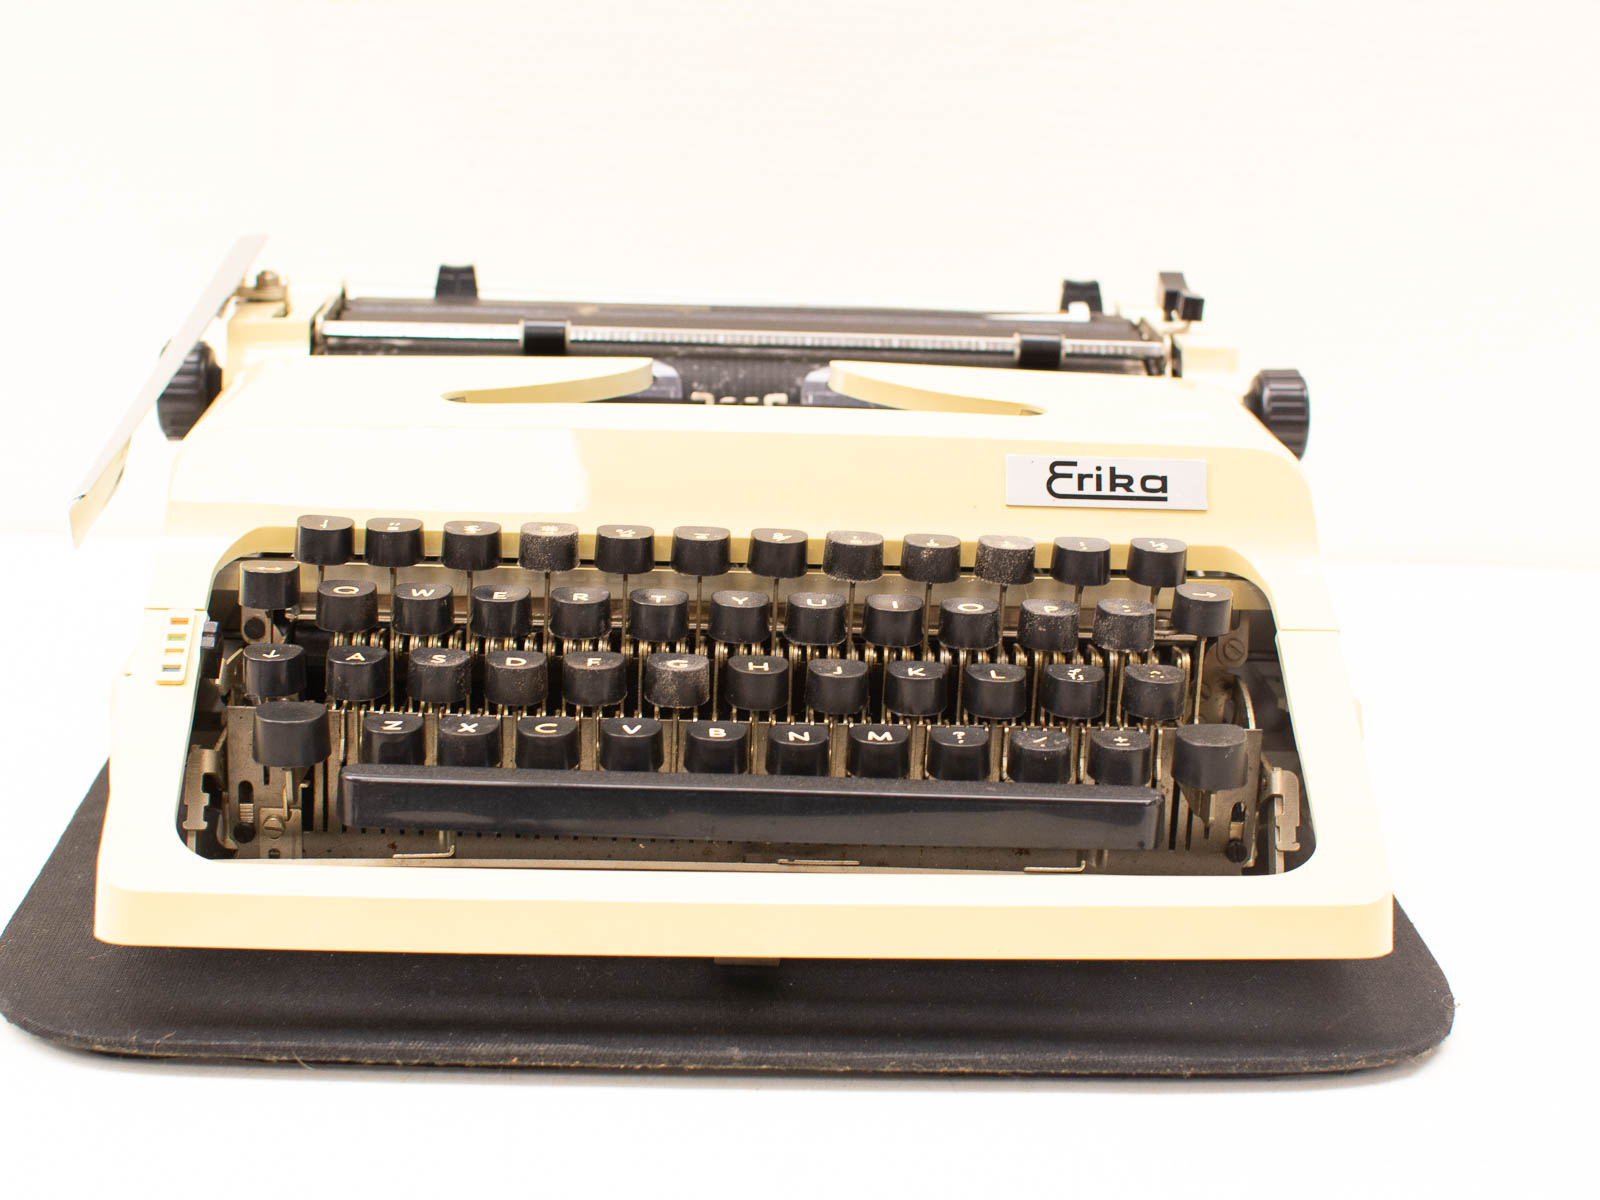 Erika typemachine 30845